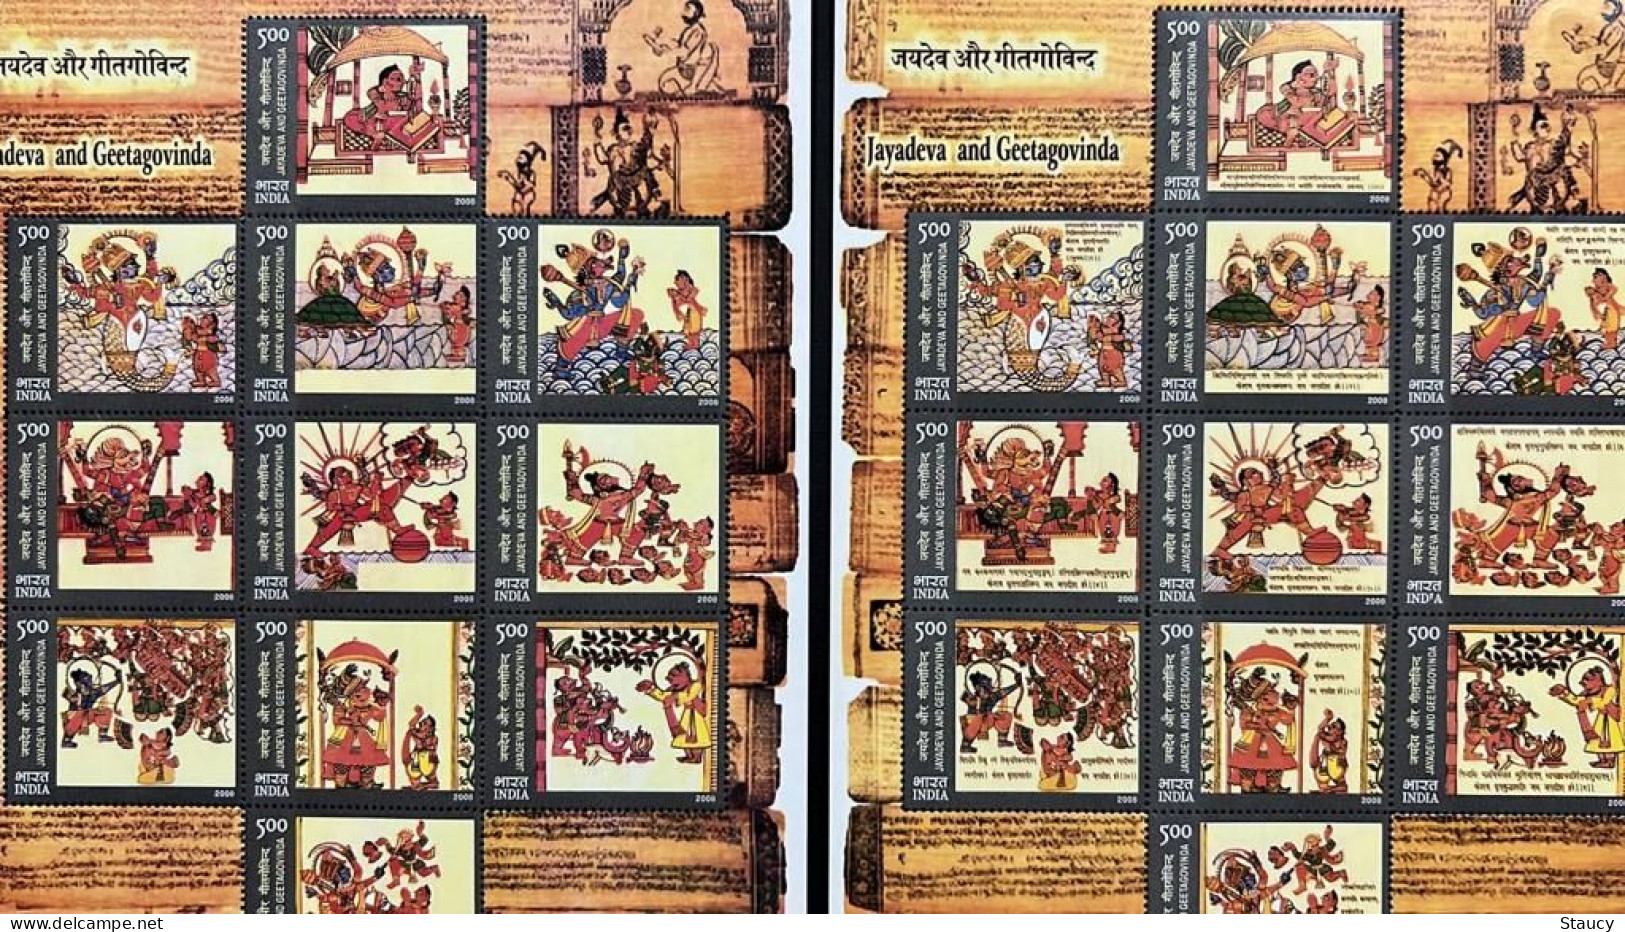 India 2009 Error Jayadeva Geeta Govinda Miniature Sheet MS MNH, Error "BLACK COLOUR SHLOKS OMMITTED" As Per Scan - Errors, Freaks & Oddities (EFO)